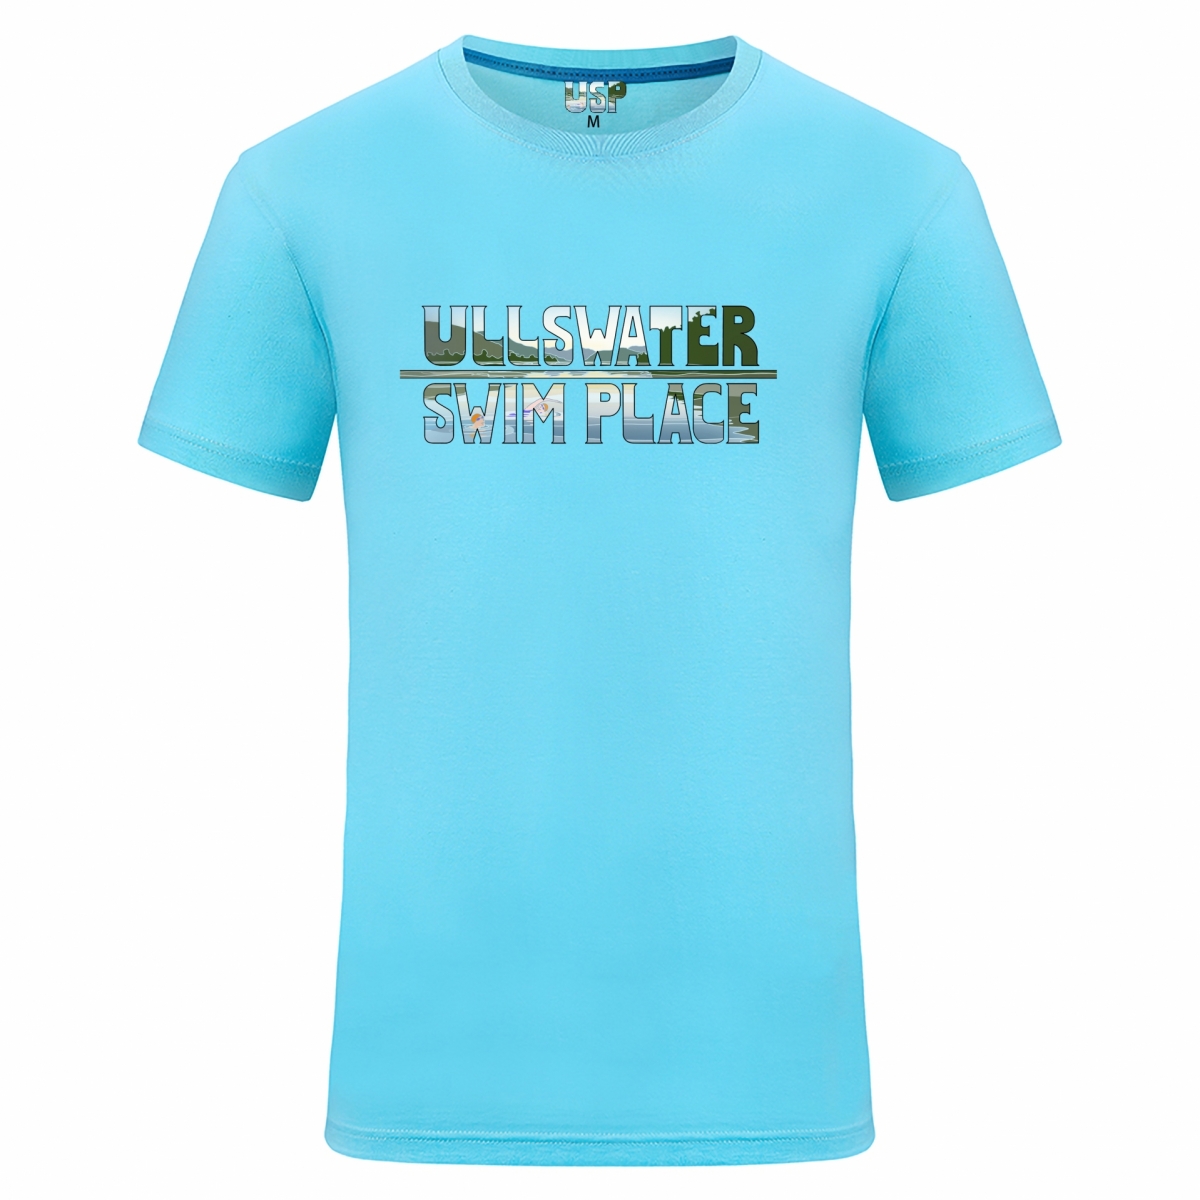 Ullswater Swim Place T-Shirt - XXL